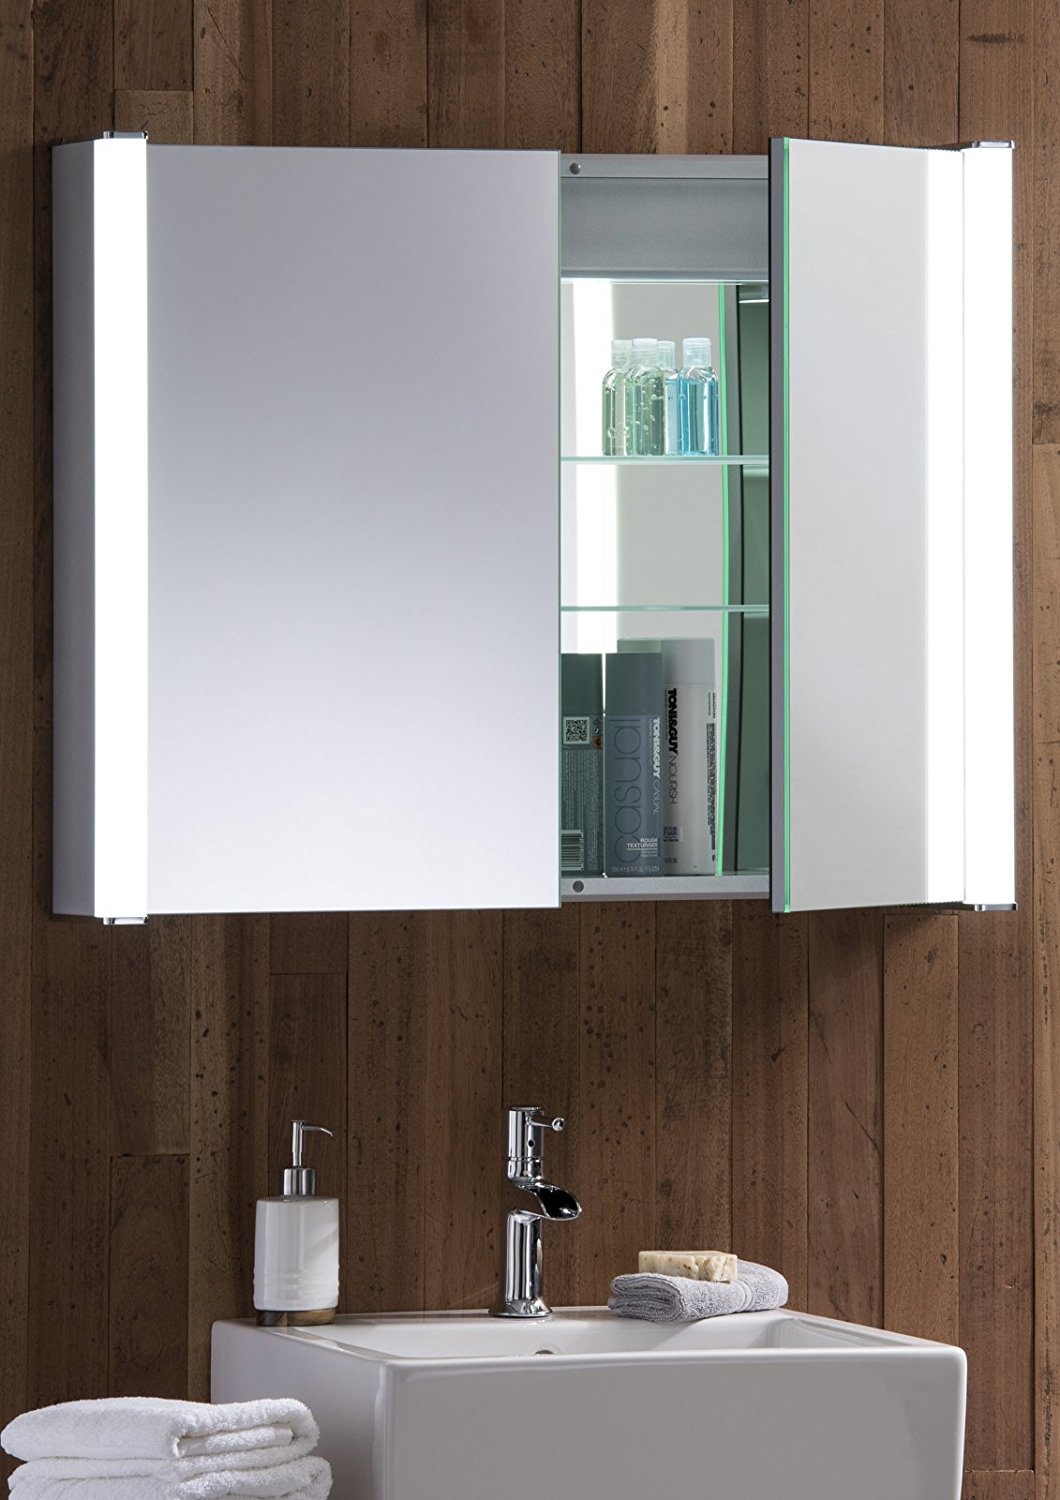 Bathroom mirror cabinets beautiful bathroom cabinets mirror cabinet illuminated with lights |  Home TFYRVPZ